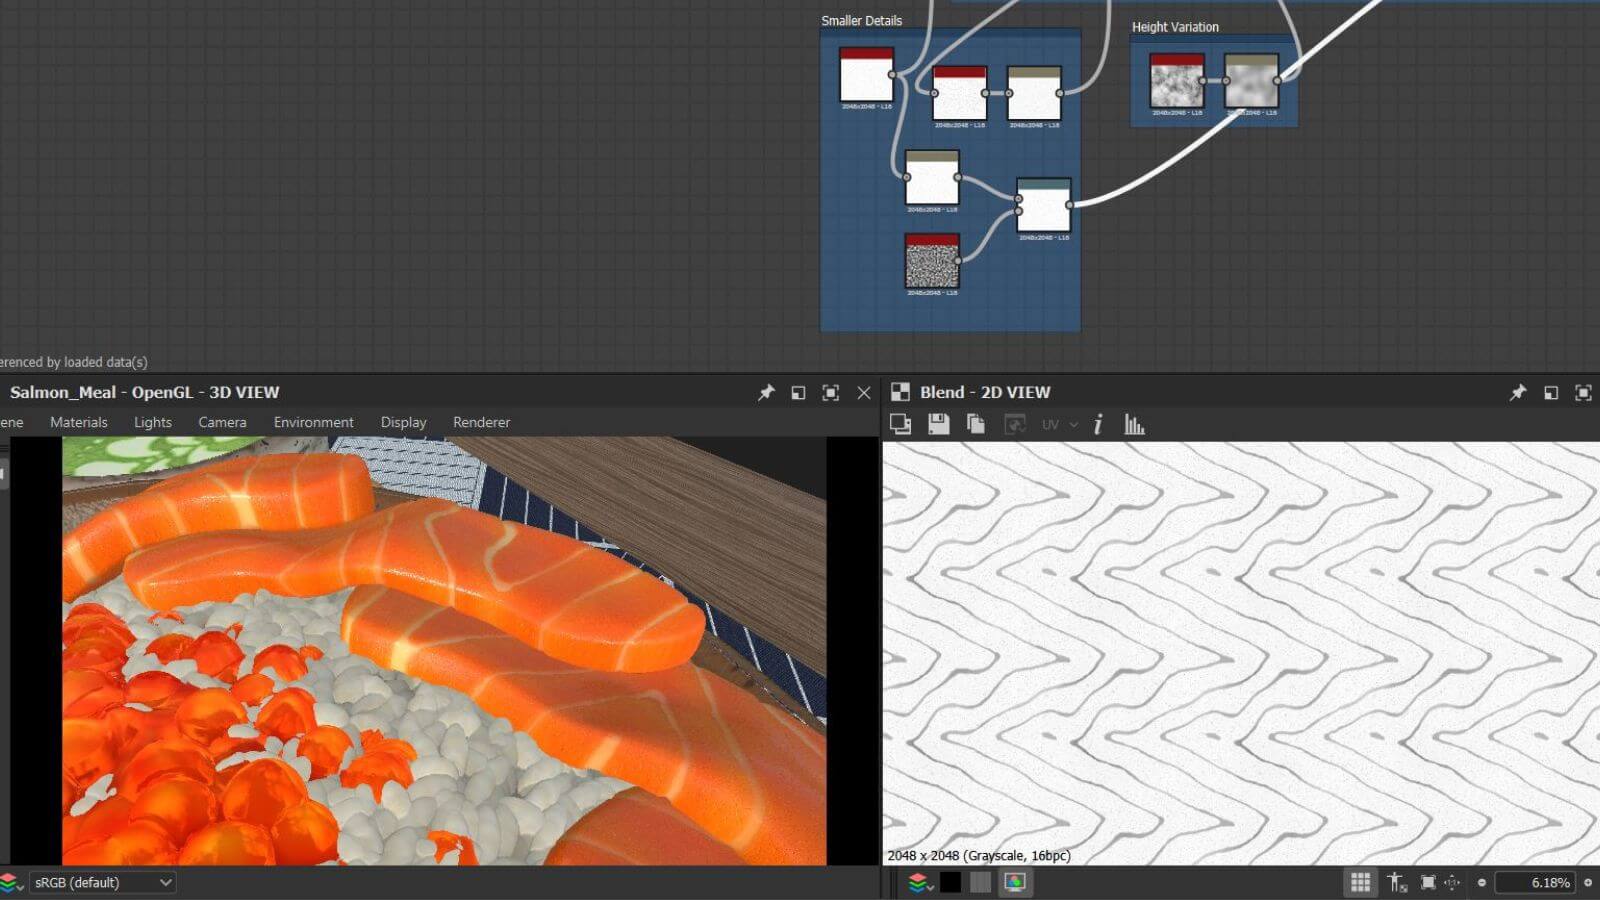 Close-up image of salmon meal in Substance 3D Designer